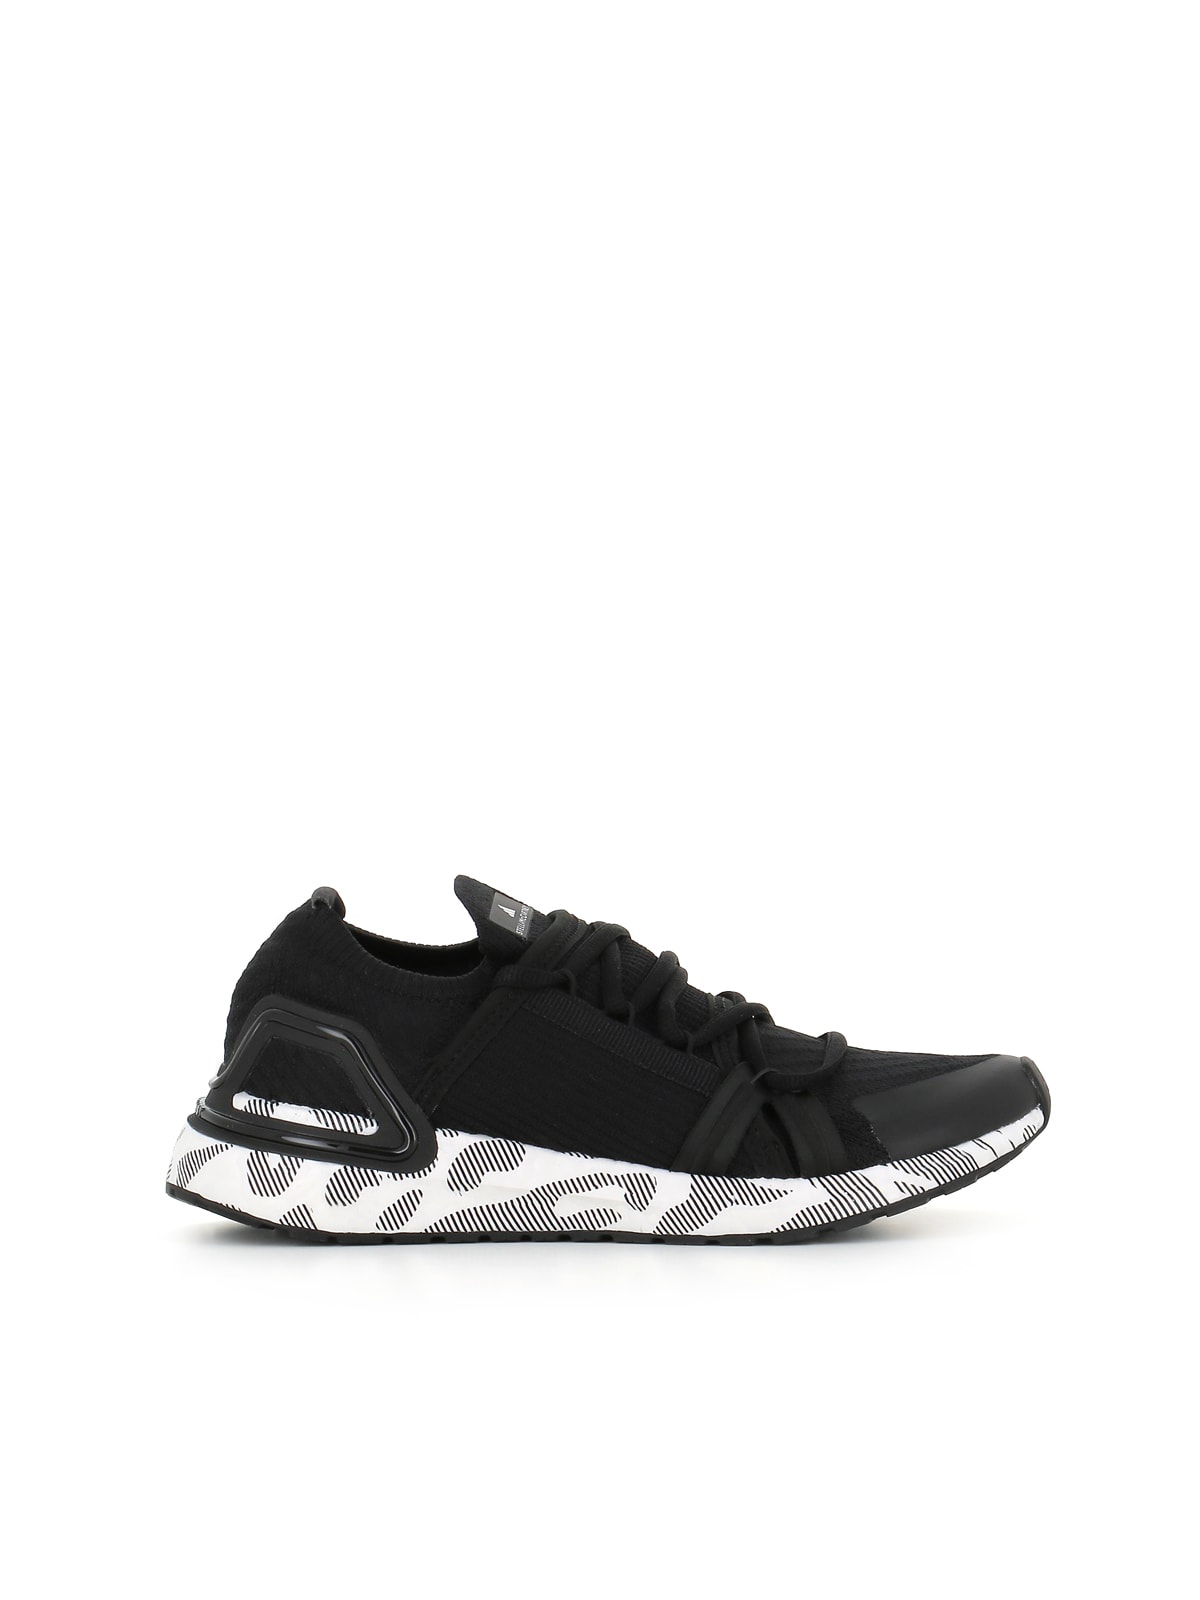 Shop Adidas By Stella Mccartney Sneakers Asmc Ultraboost 20 In Black/white